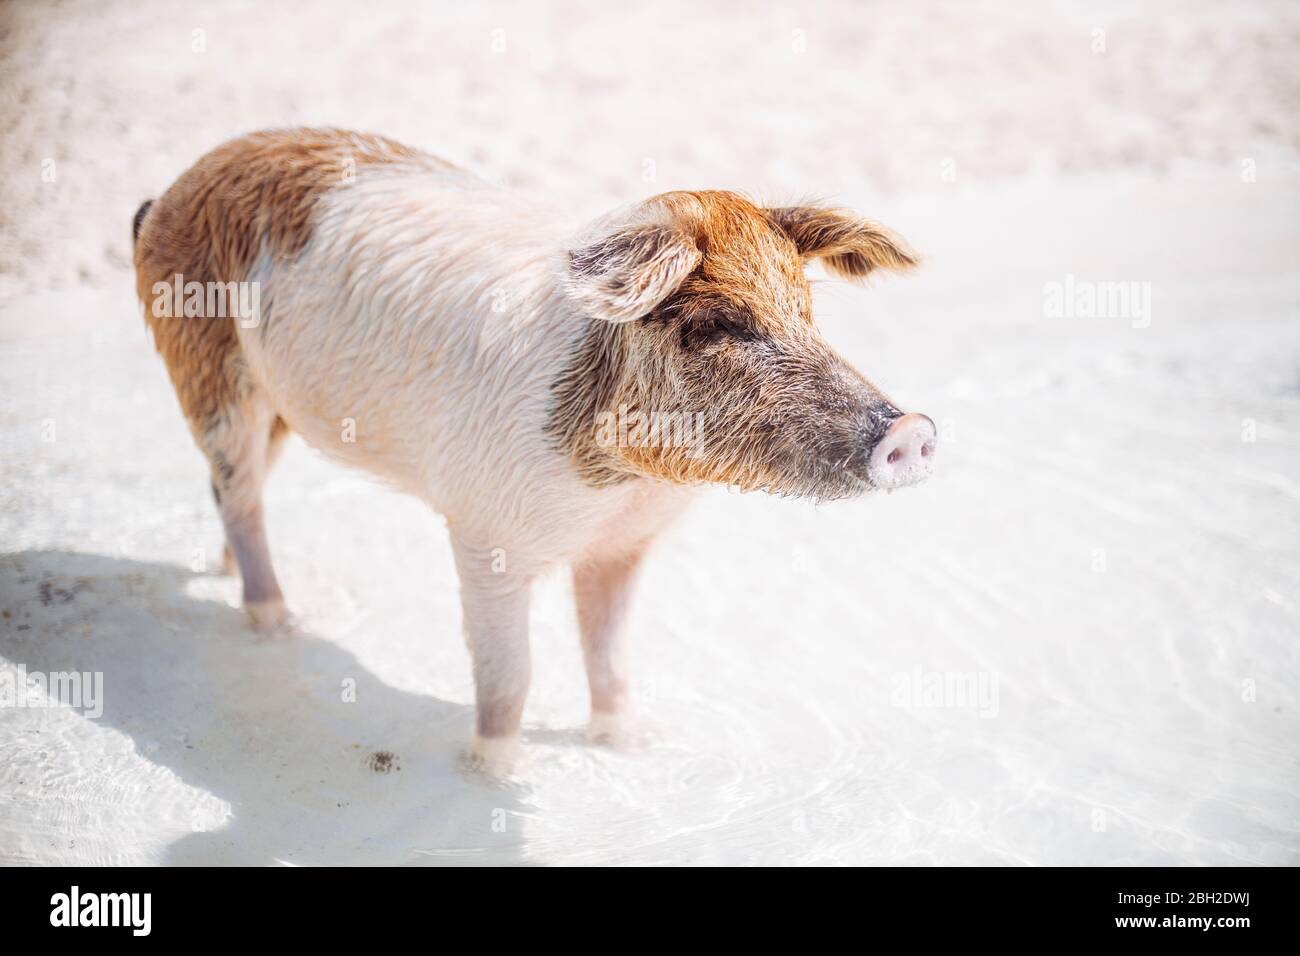 Pig swimming in sea on Pig Beach, Exuma, Bahamas, Caribbean Stock Photo